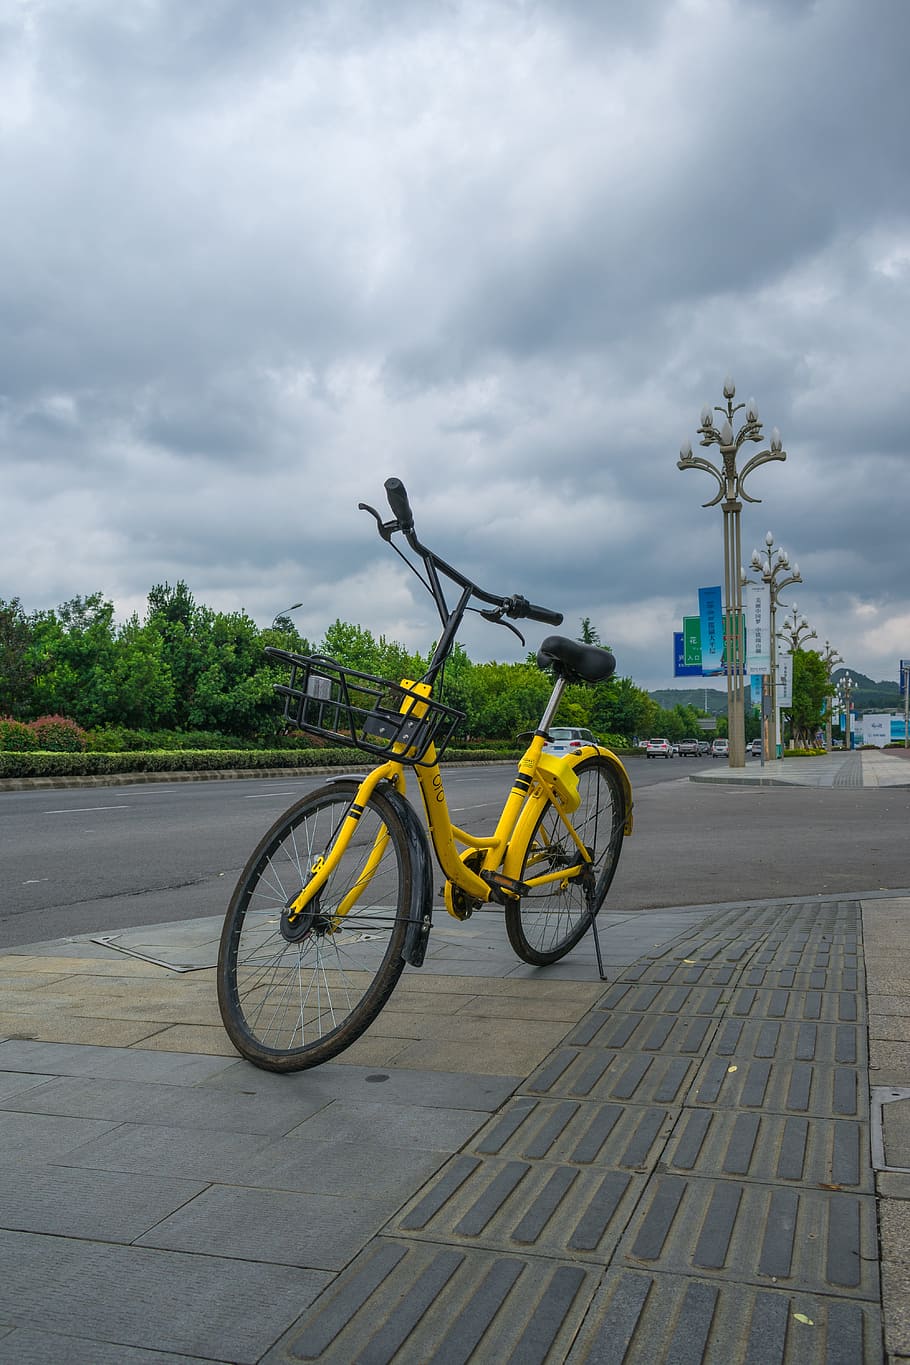 ofo, the little yellow car, shared bike, bike, ofo shared bike, the sharing economy, street, bicycle, cloud - sky, transportation